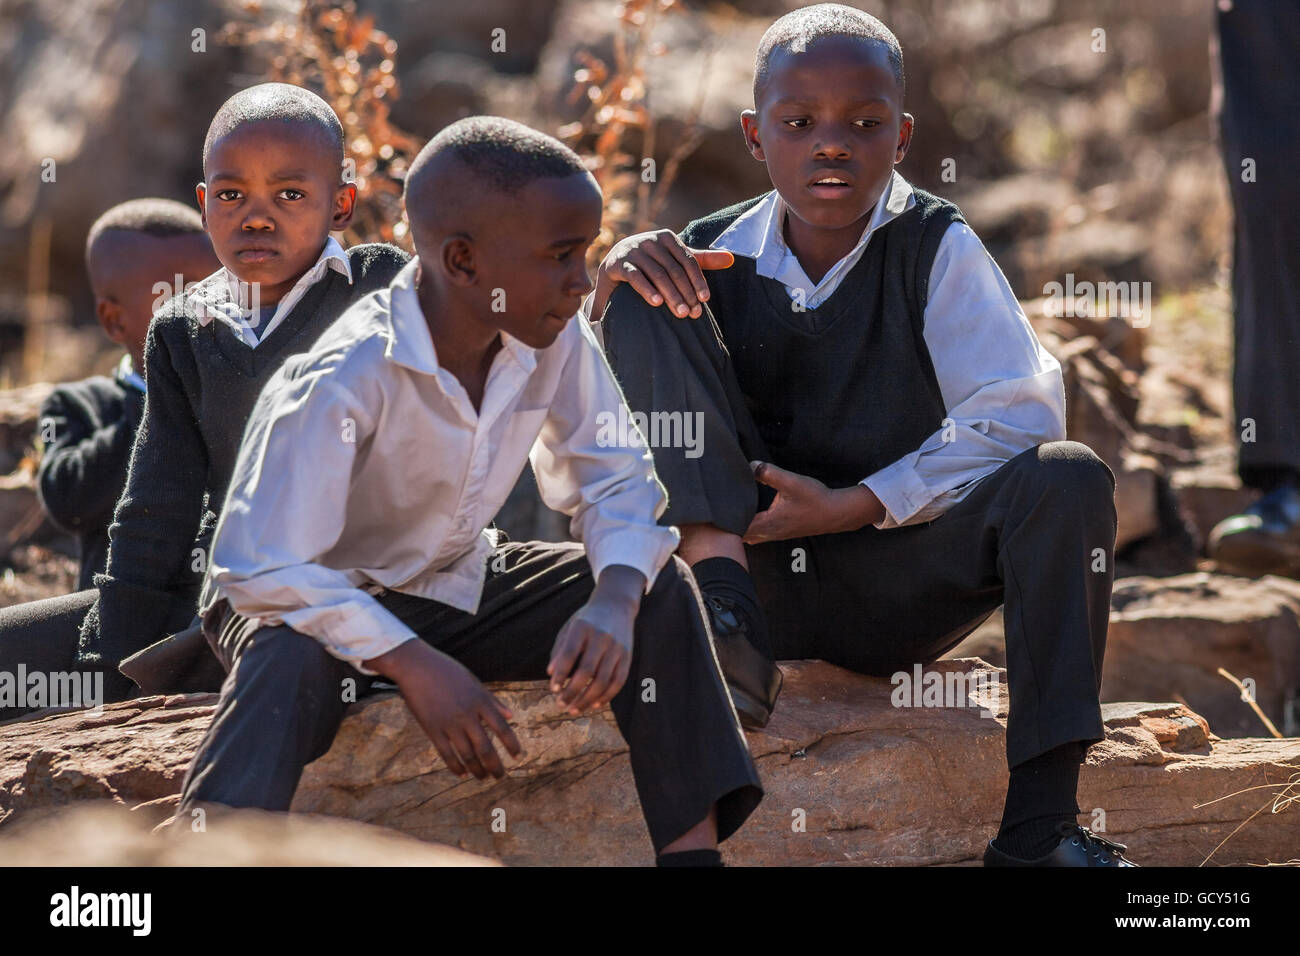 African little boys Stock Photo